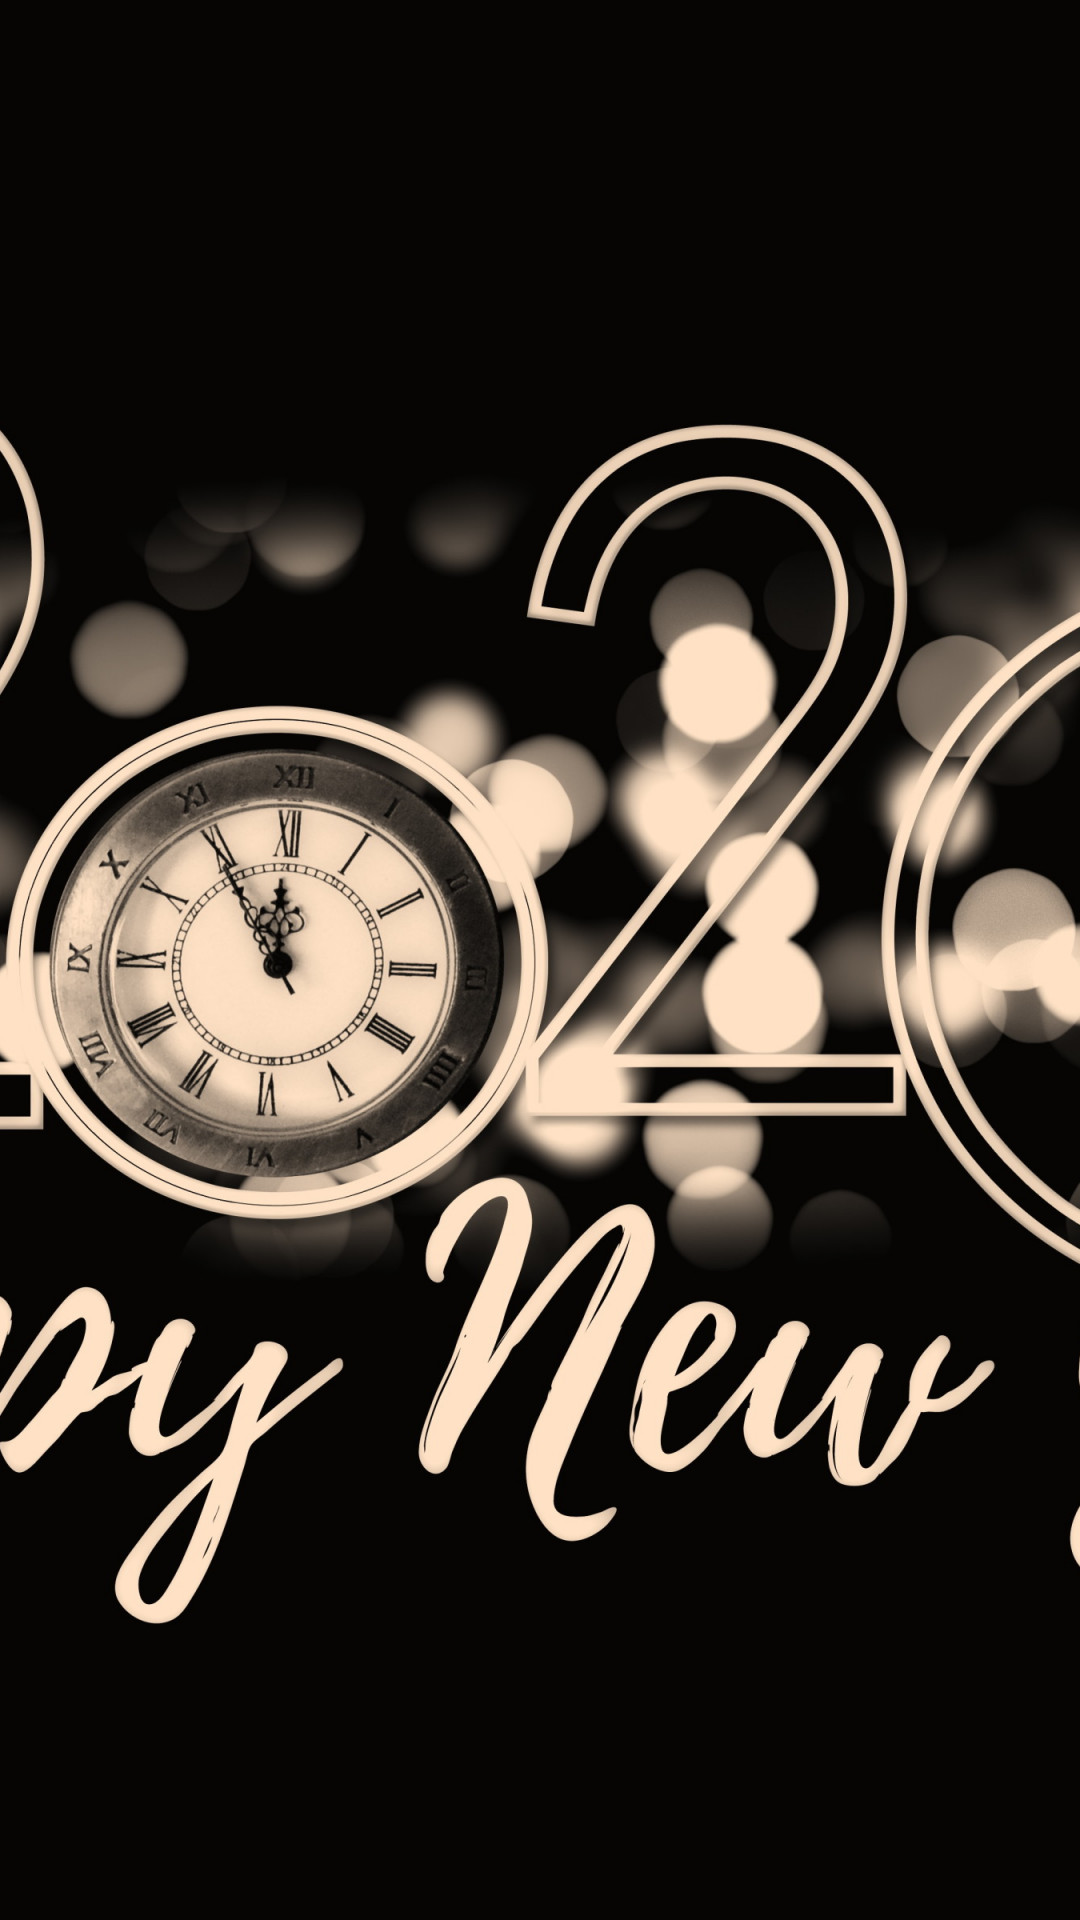 Download wallpaper: 2020 Happy New Year 1080x1920